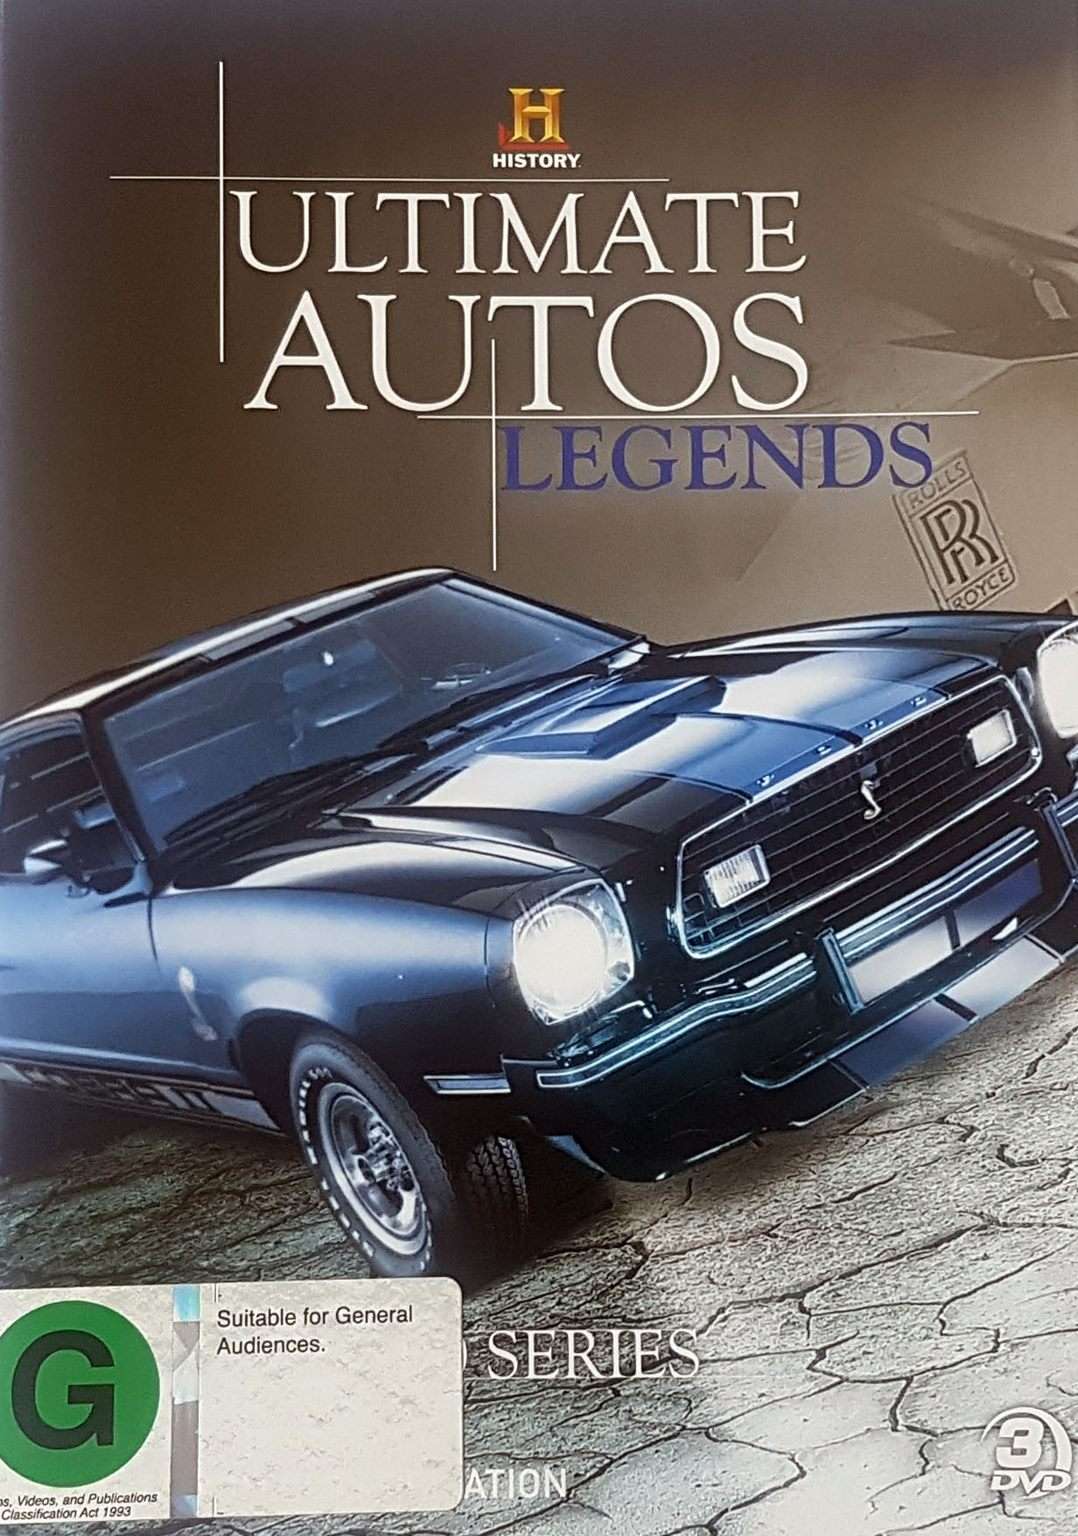 Ultimate Autos Legends History Channel 3 Disc